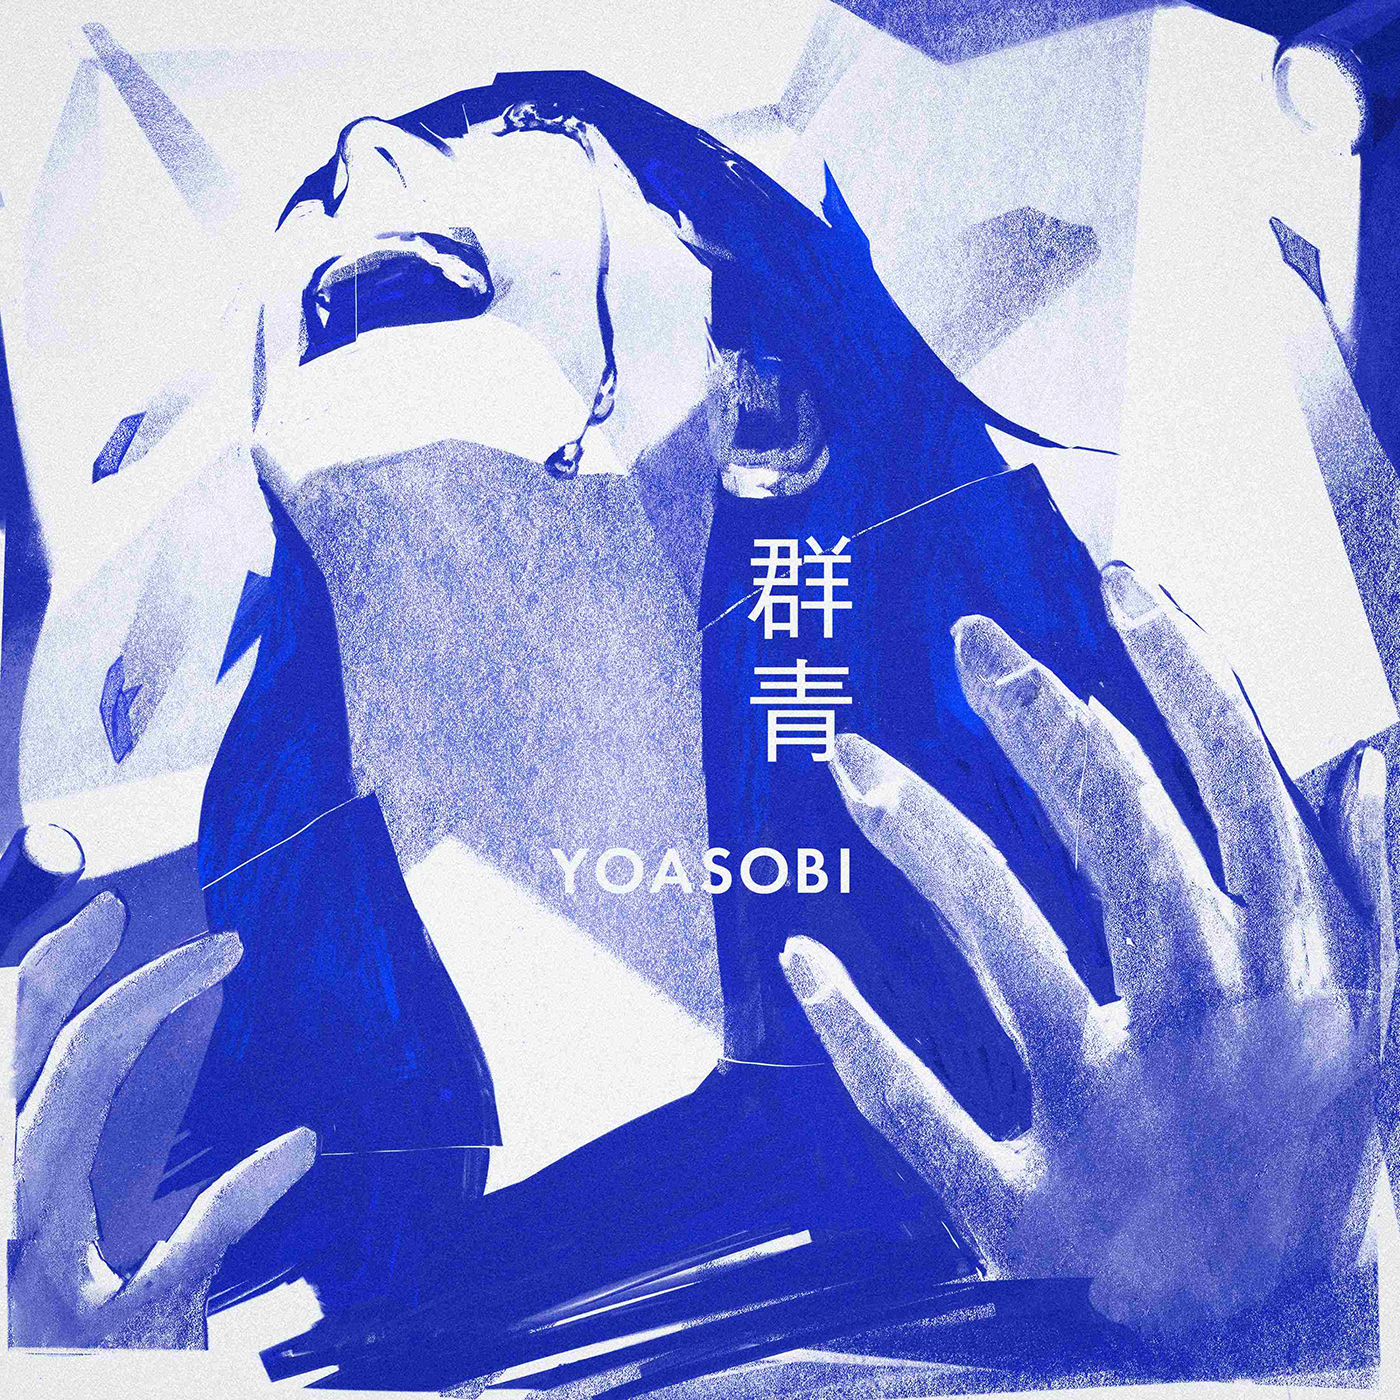 YOASOBI、「群青」が史上5曲目＆自身2曲目となるストリーミング累計再生回数6億回を突破